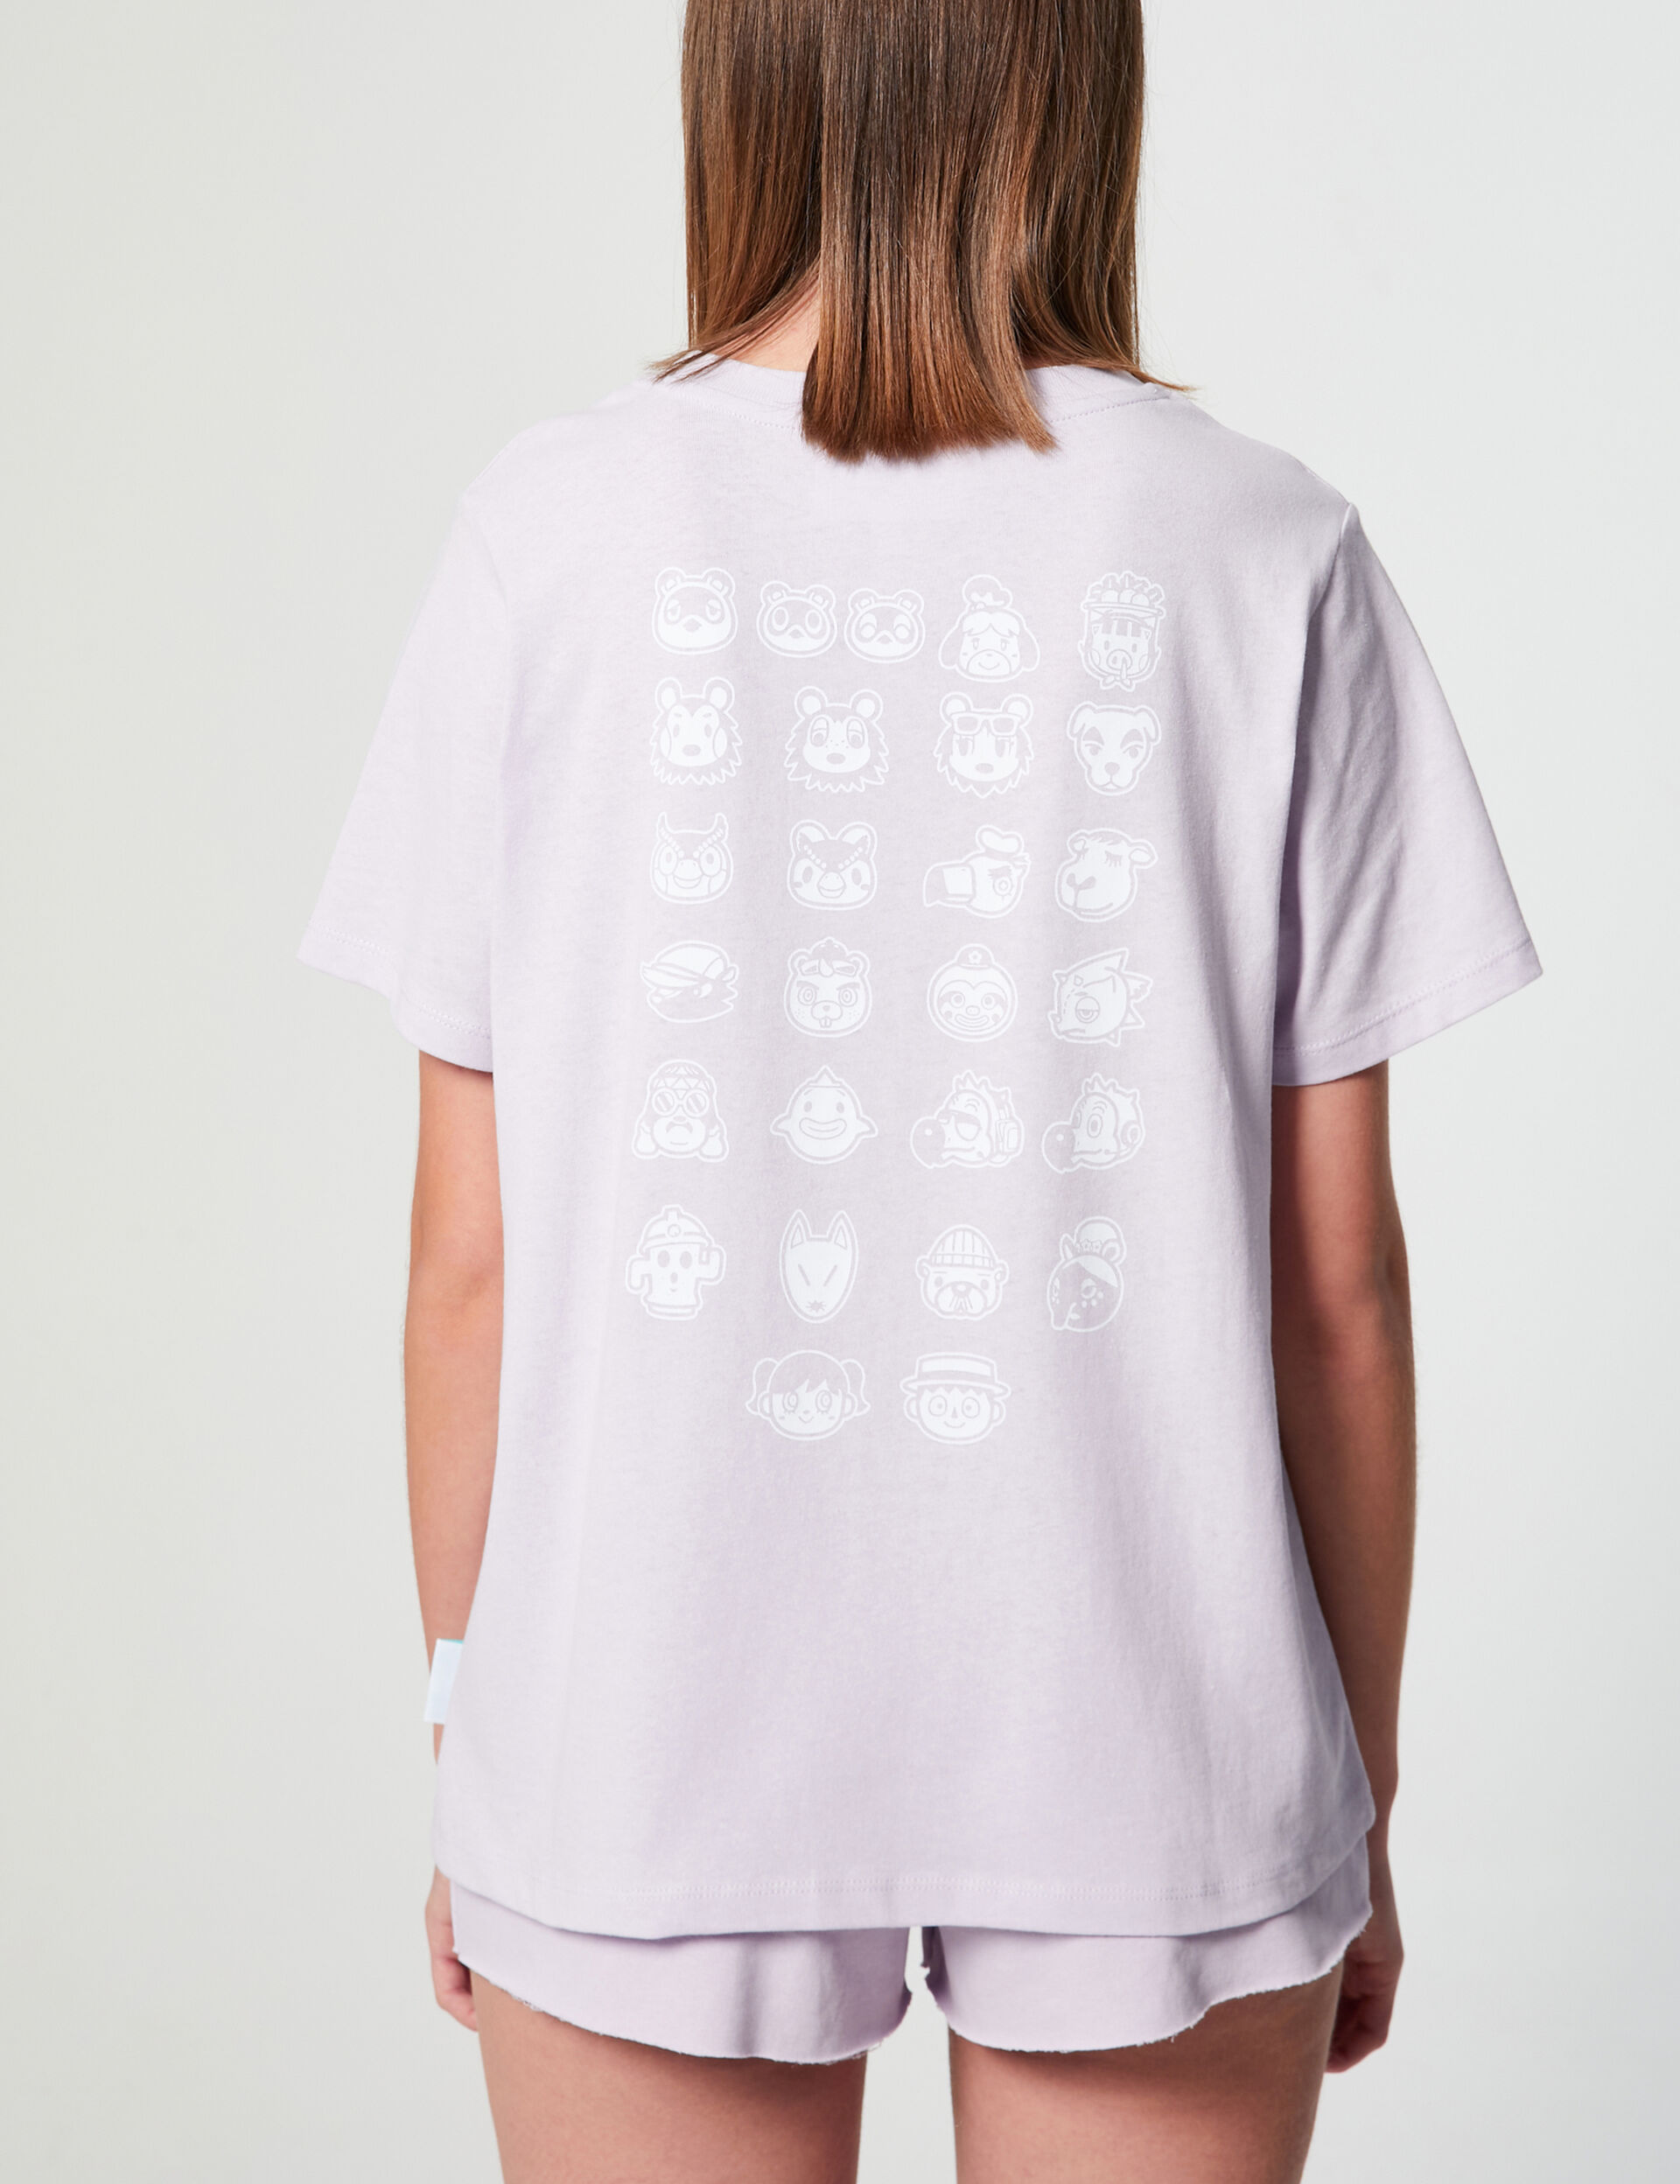 Animal Crossing T-shirt